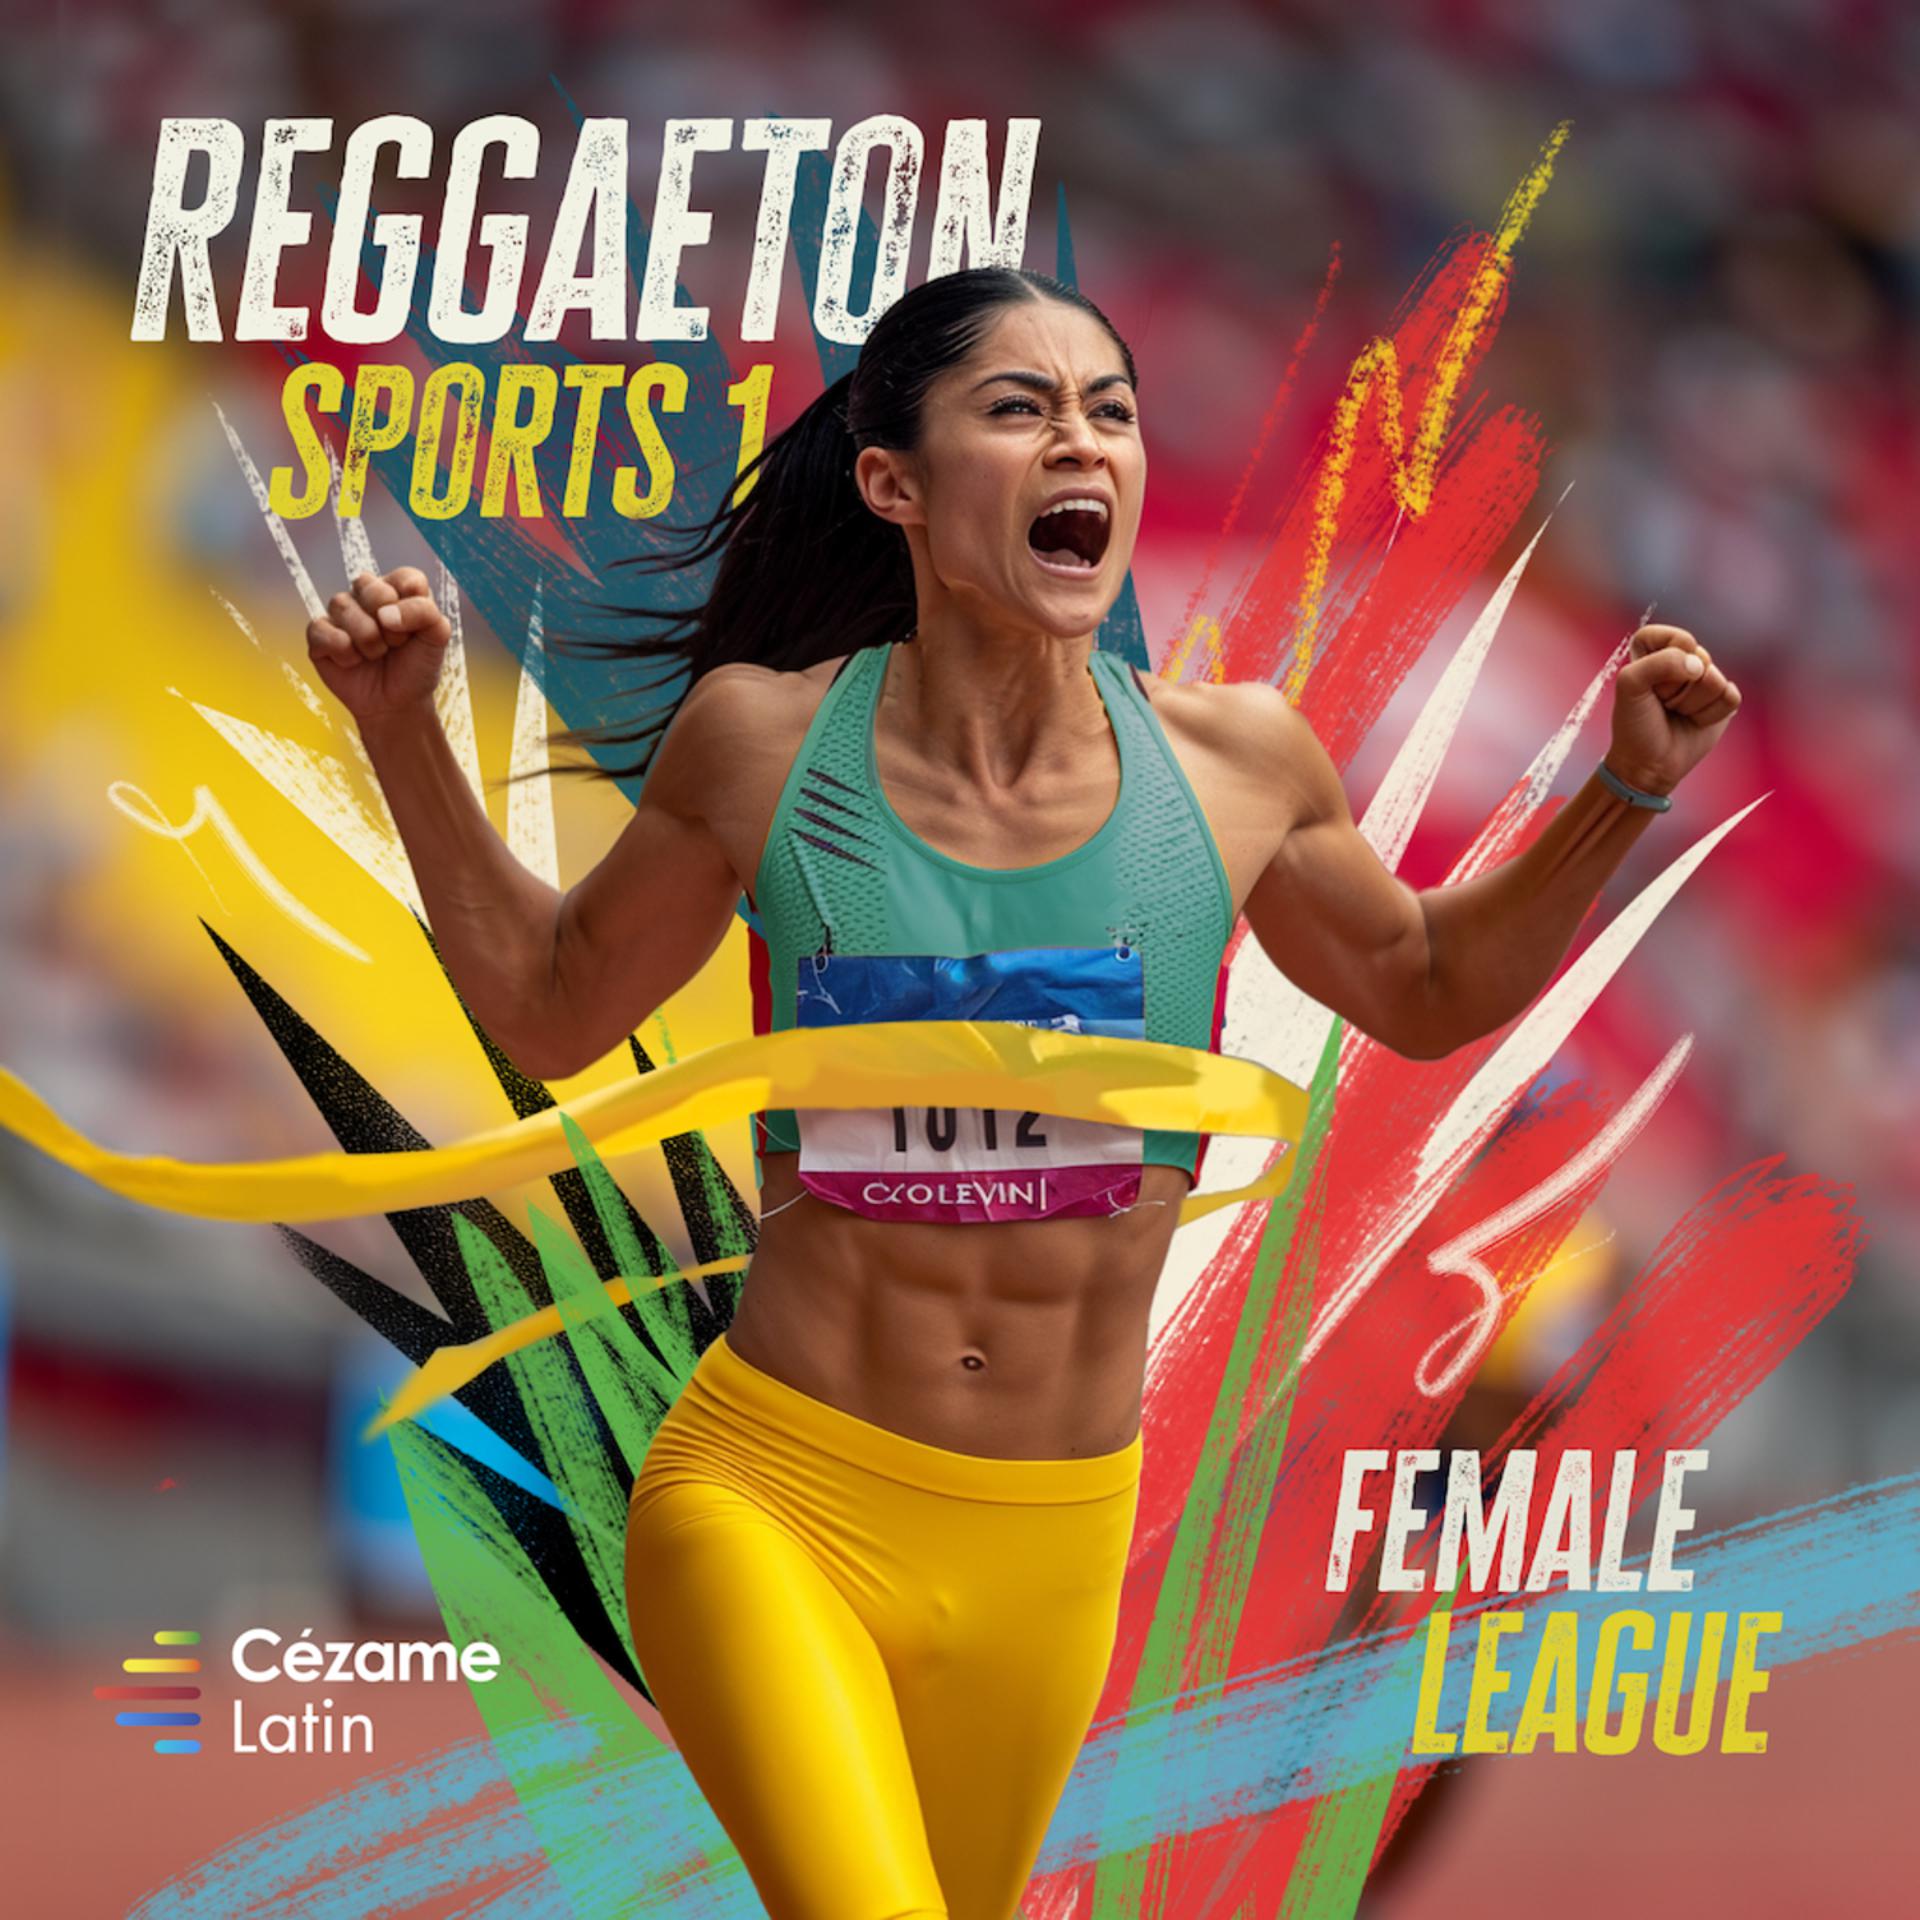 Постер альбома Reggaeton Sports 1 Female League